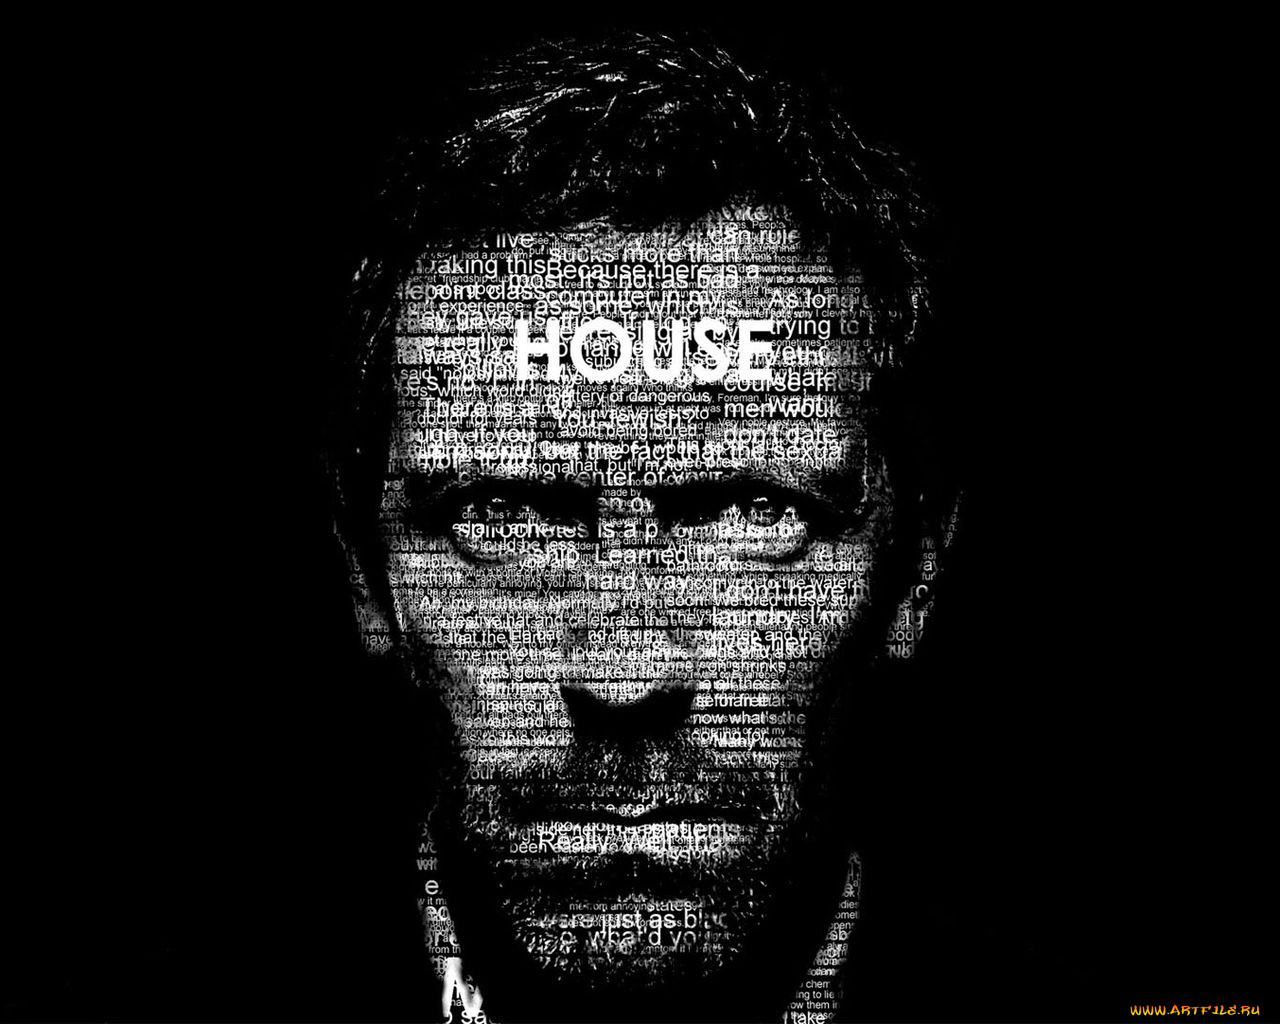 , , house